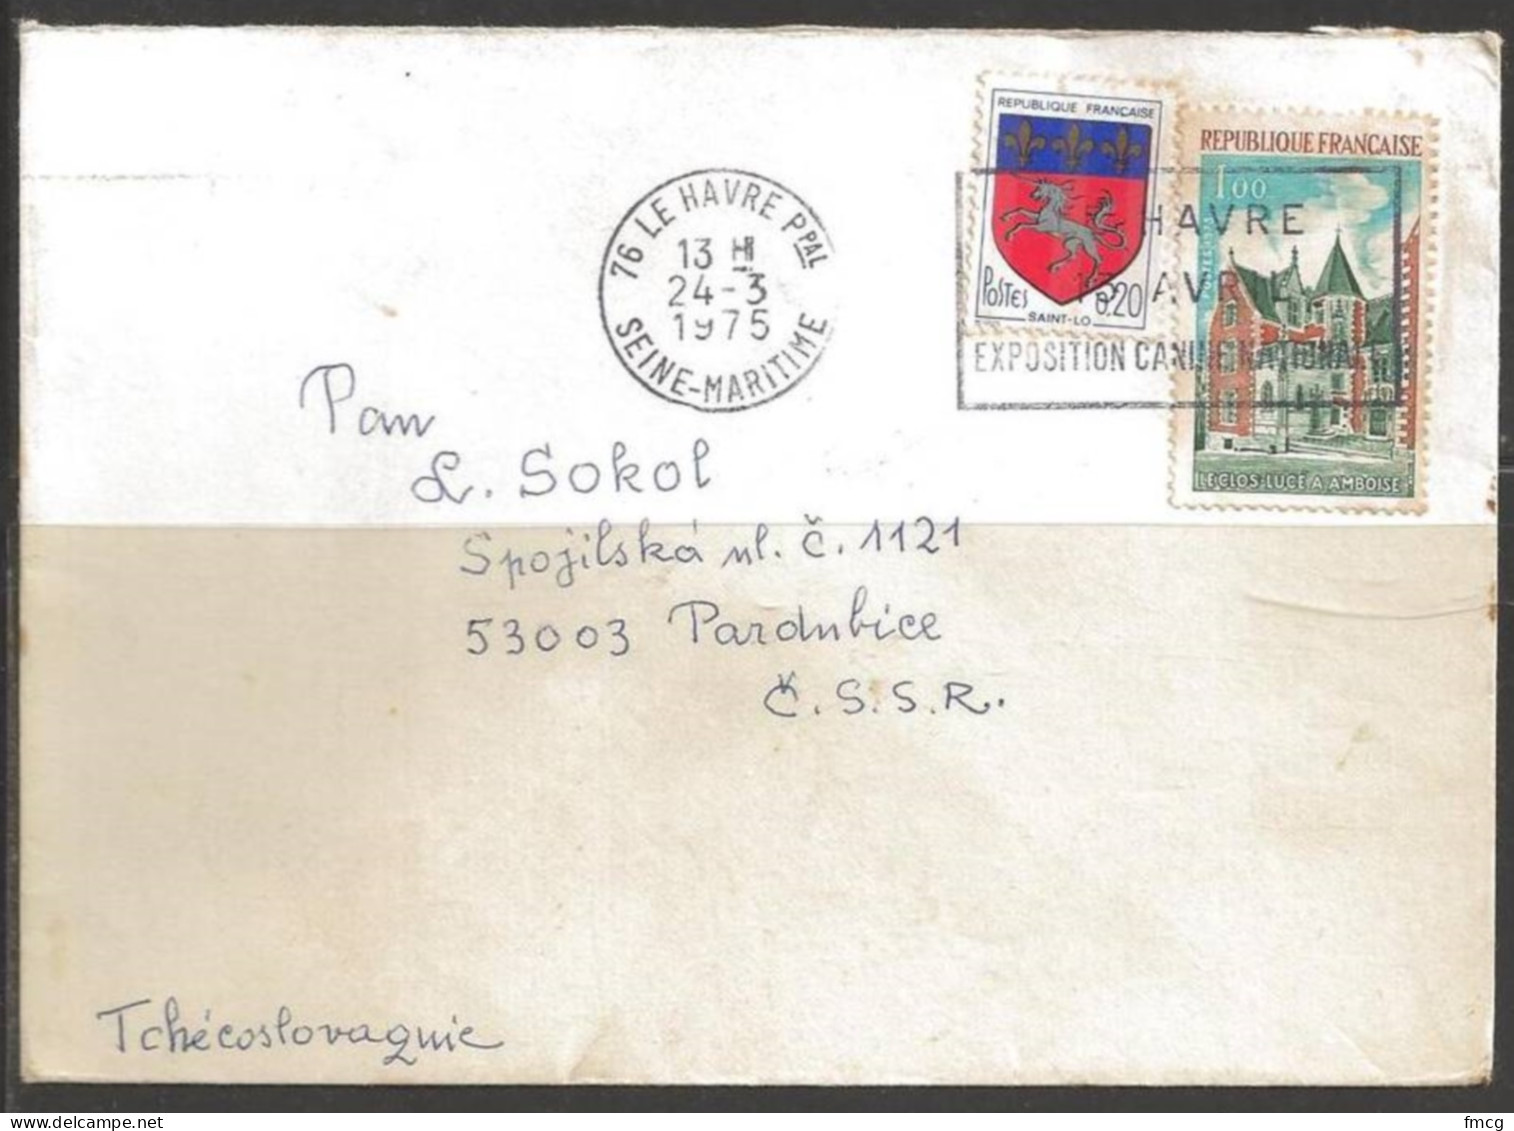  1977 1.00fr Clos-Luce, Amboise, LeHavre (24-3-1975) To Czechoslovakia. - Storia Postale